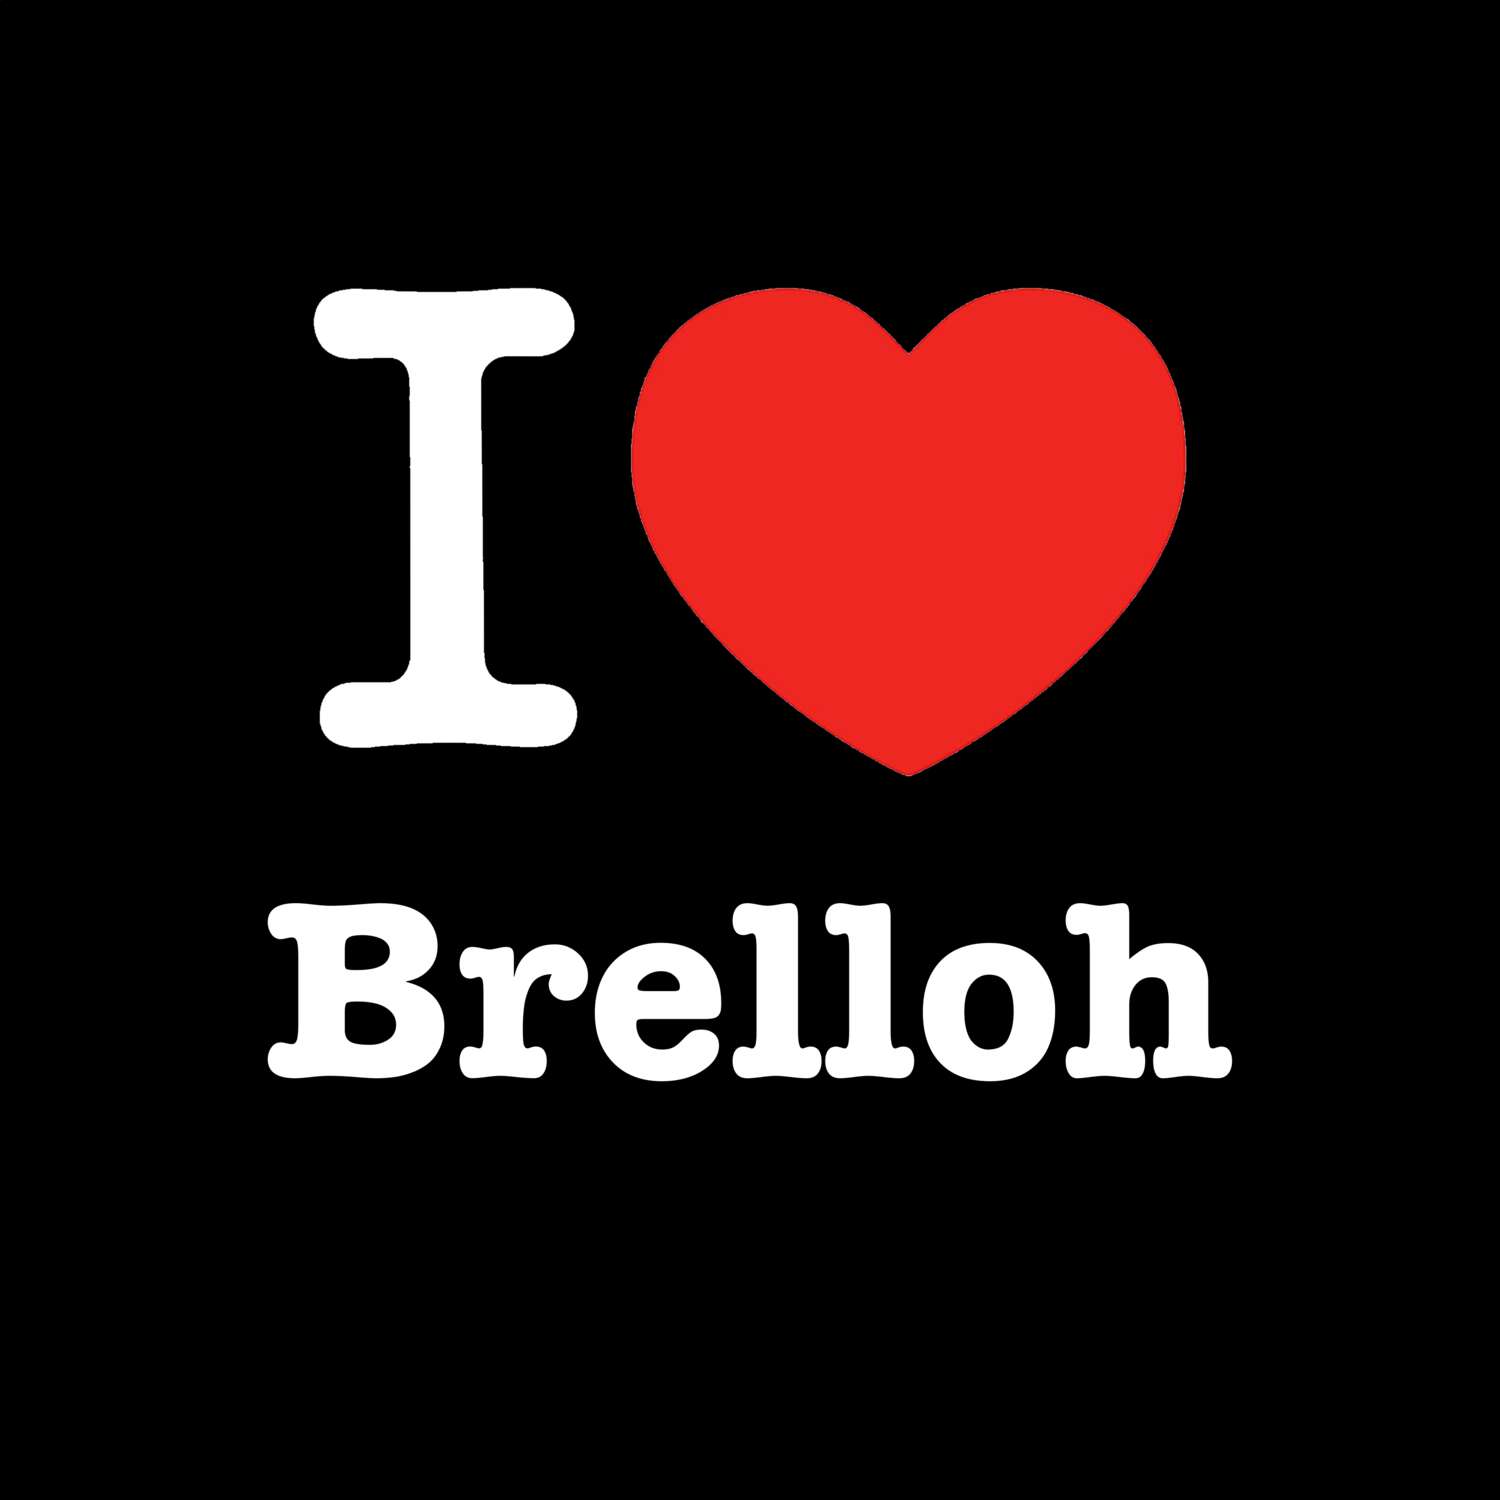 Brelloh T-Shirt »I love«